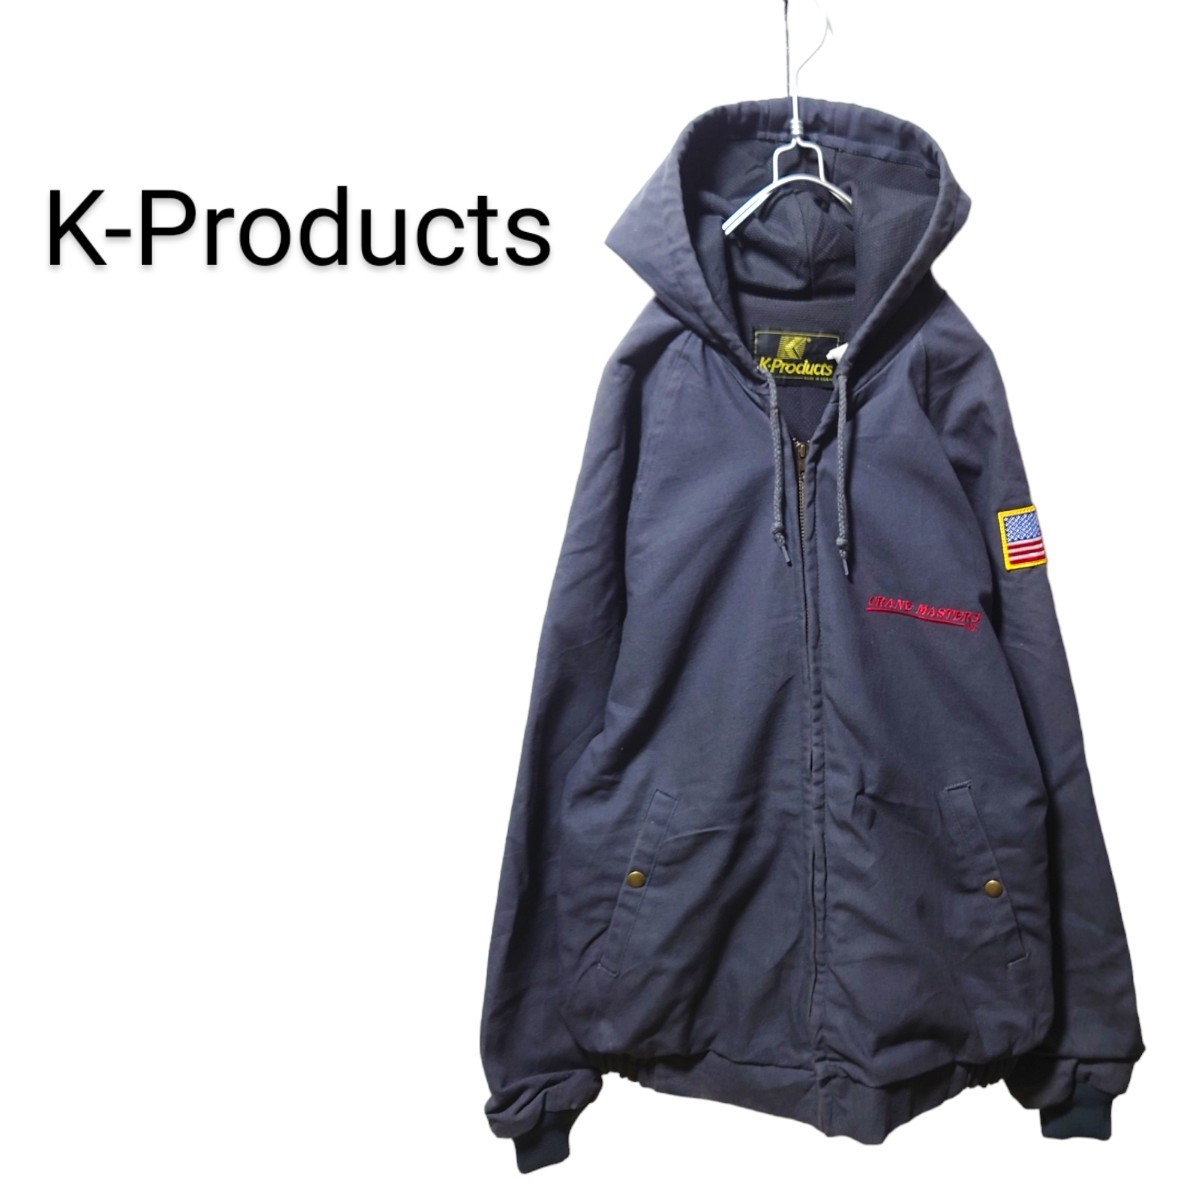 【K-Products】USA製 企業ロゴ ダックアクティブジャケット S363